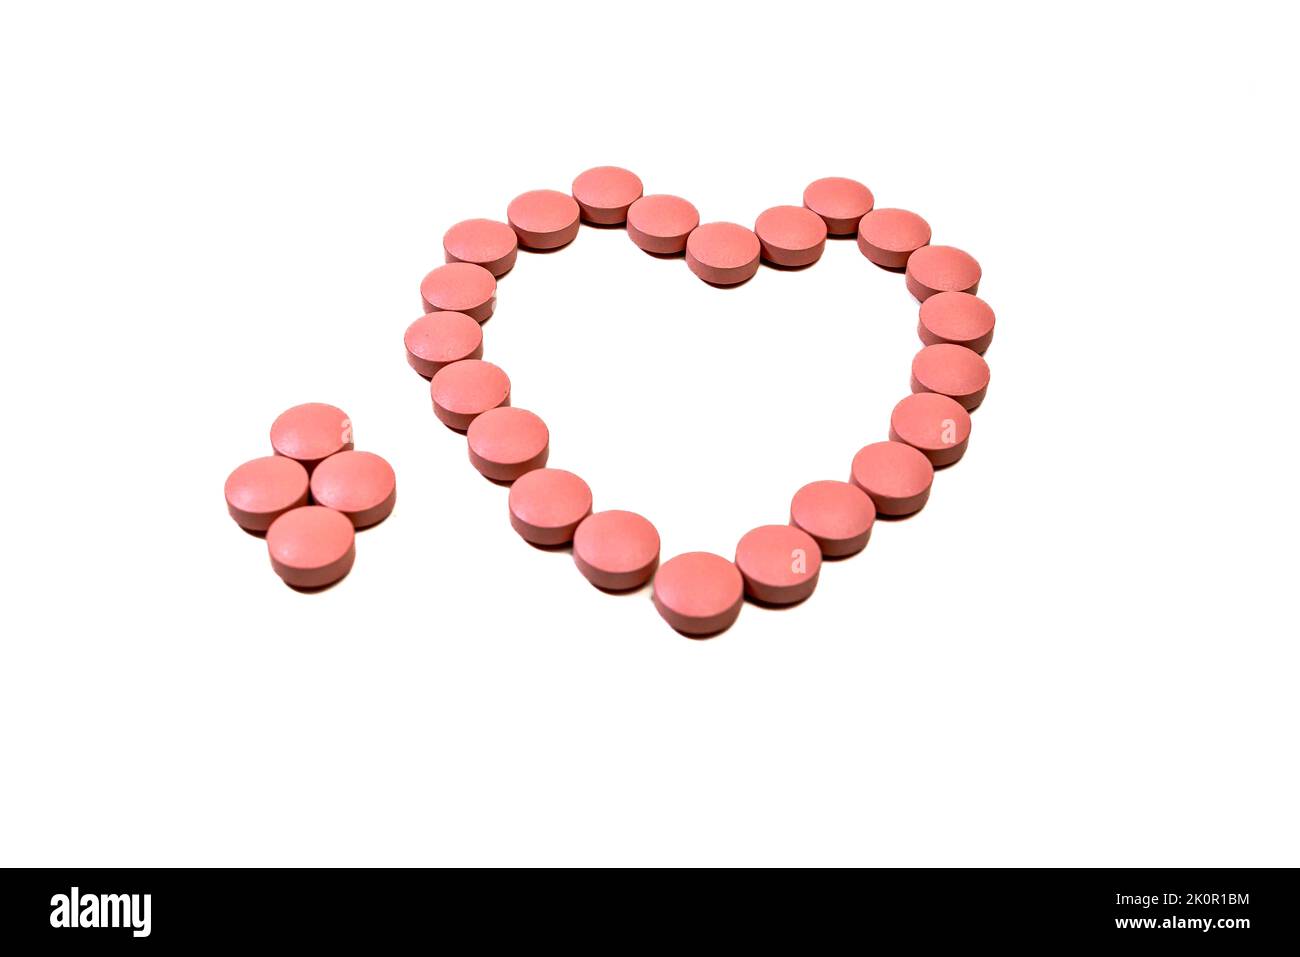 Rosa Pillen bilden ein Herz. Apotheker, Medizin Stockfoto